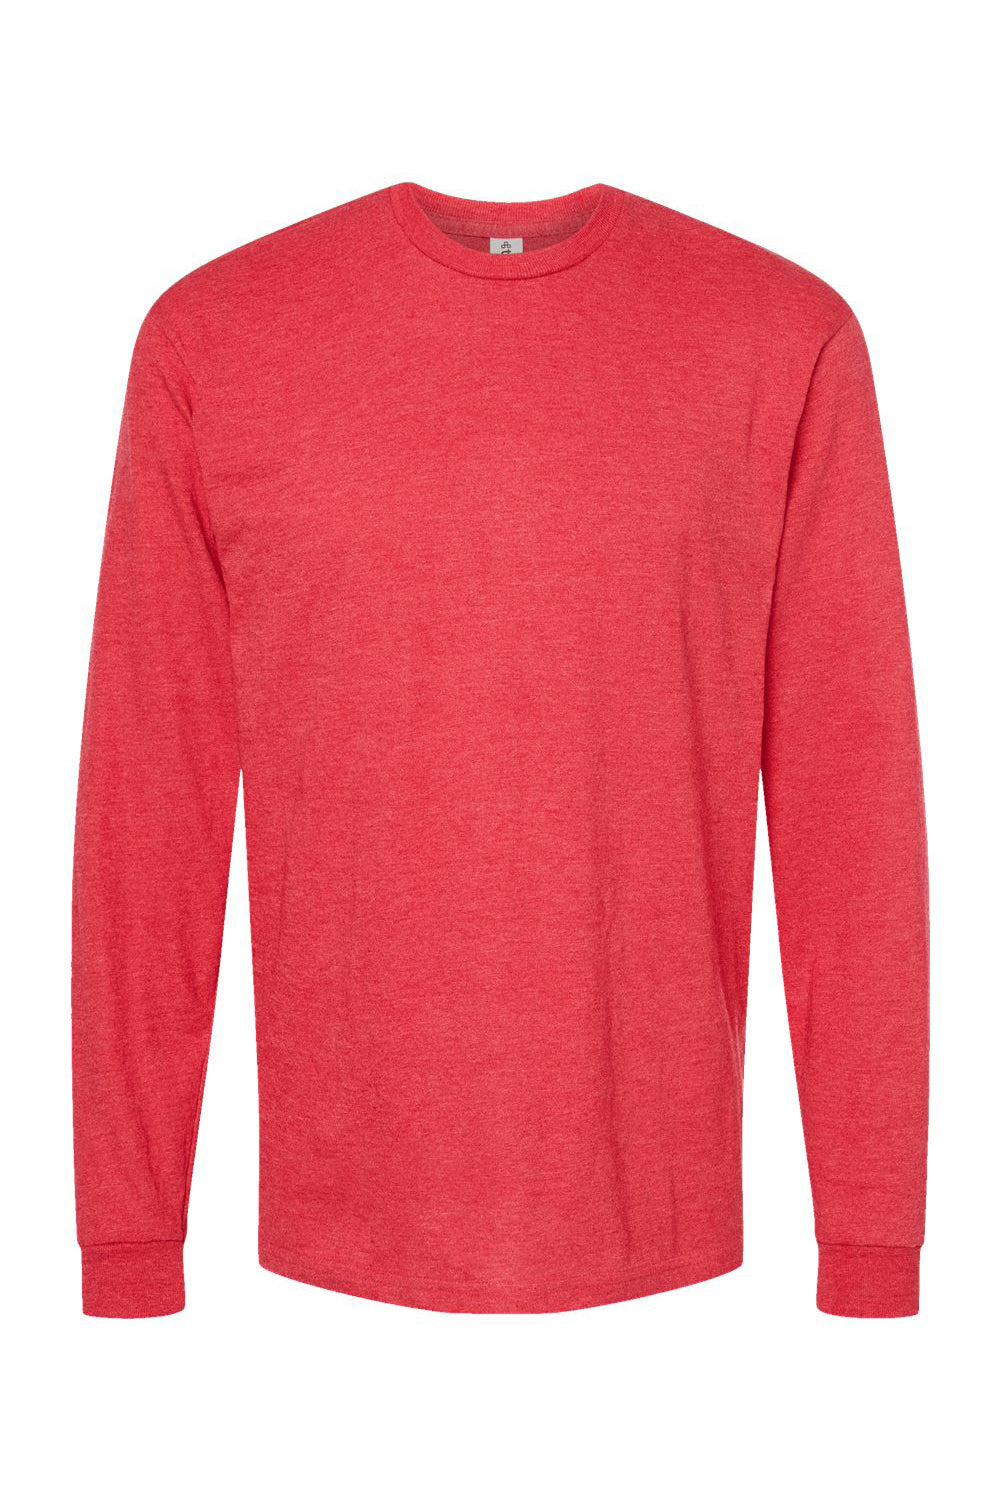 Tultex 291 Mens Jersey Long Sleeve Crewneck T-Shirt Heather Red Flat Front